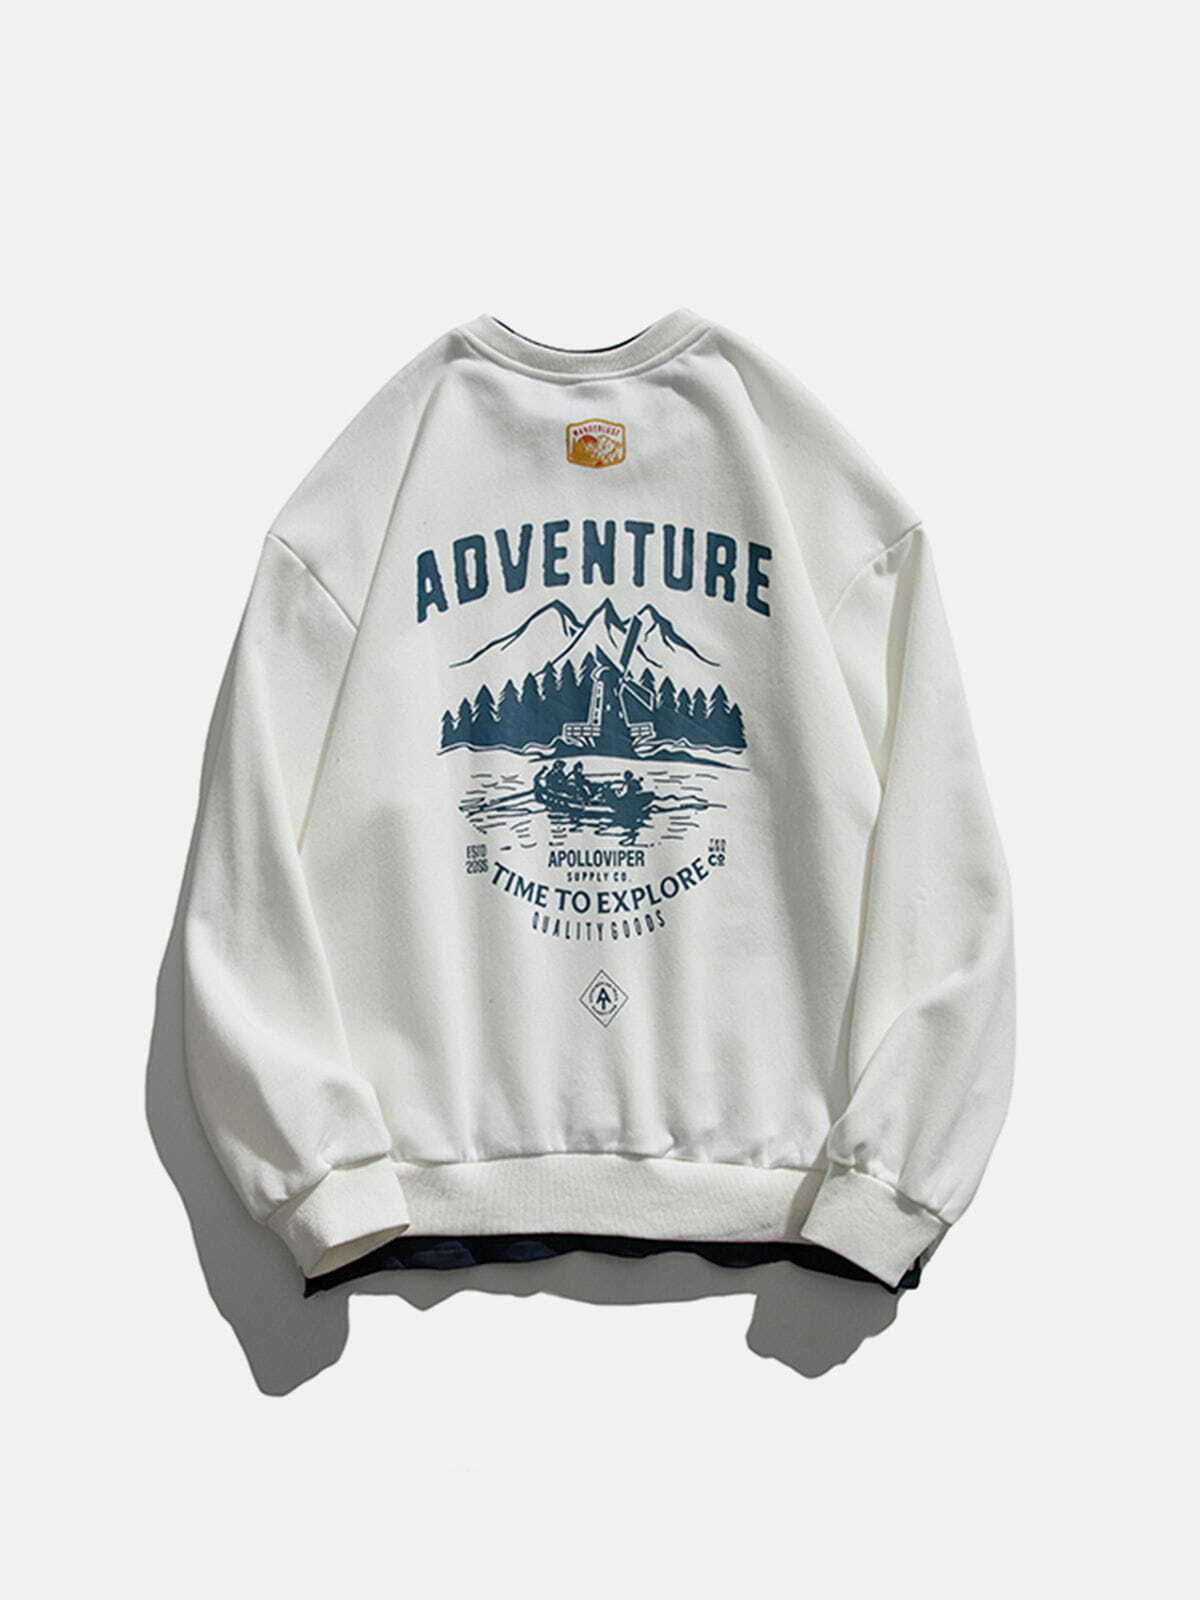 landscape print sweatshirt edgy alphabet design 3031